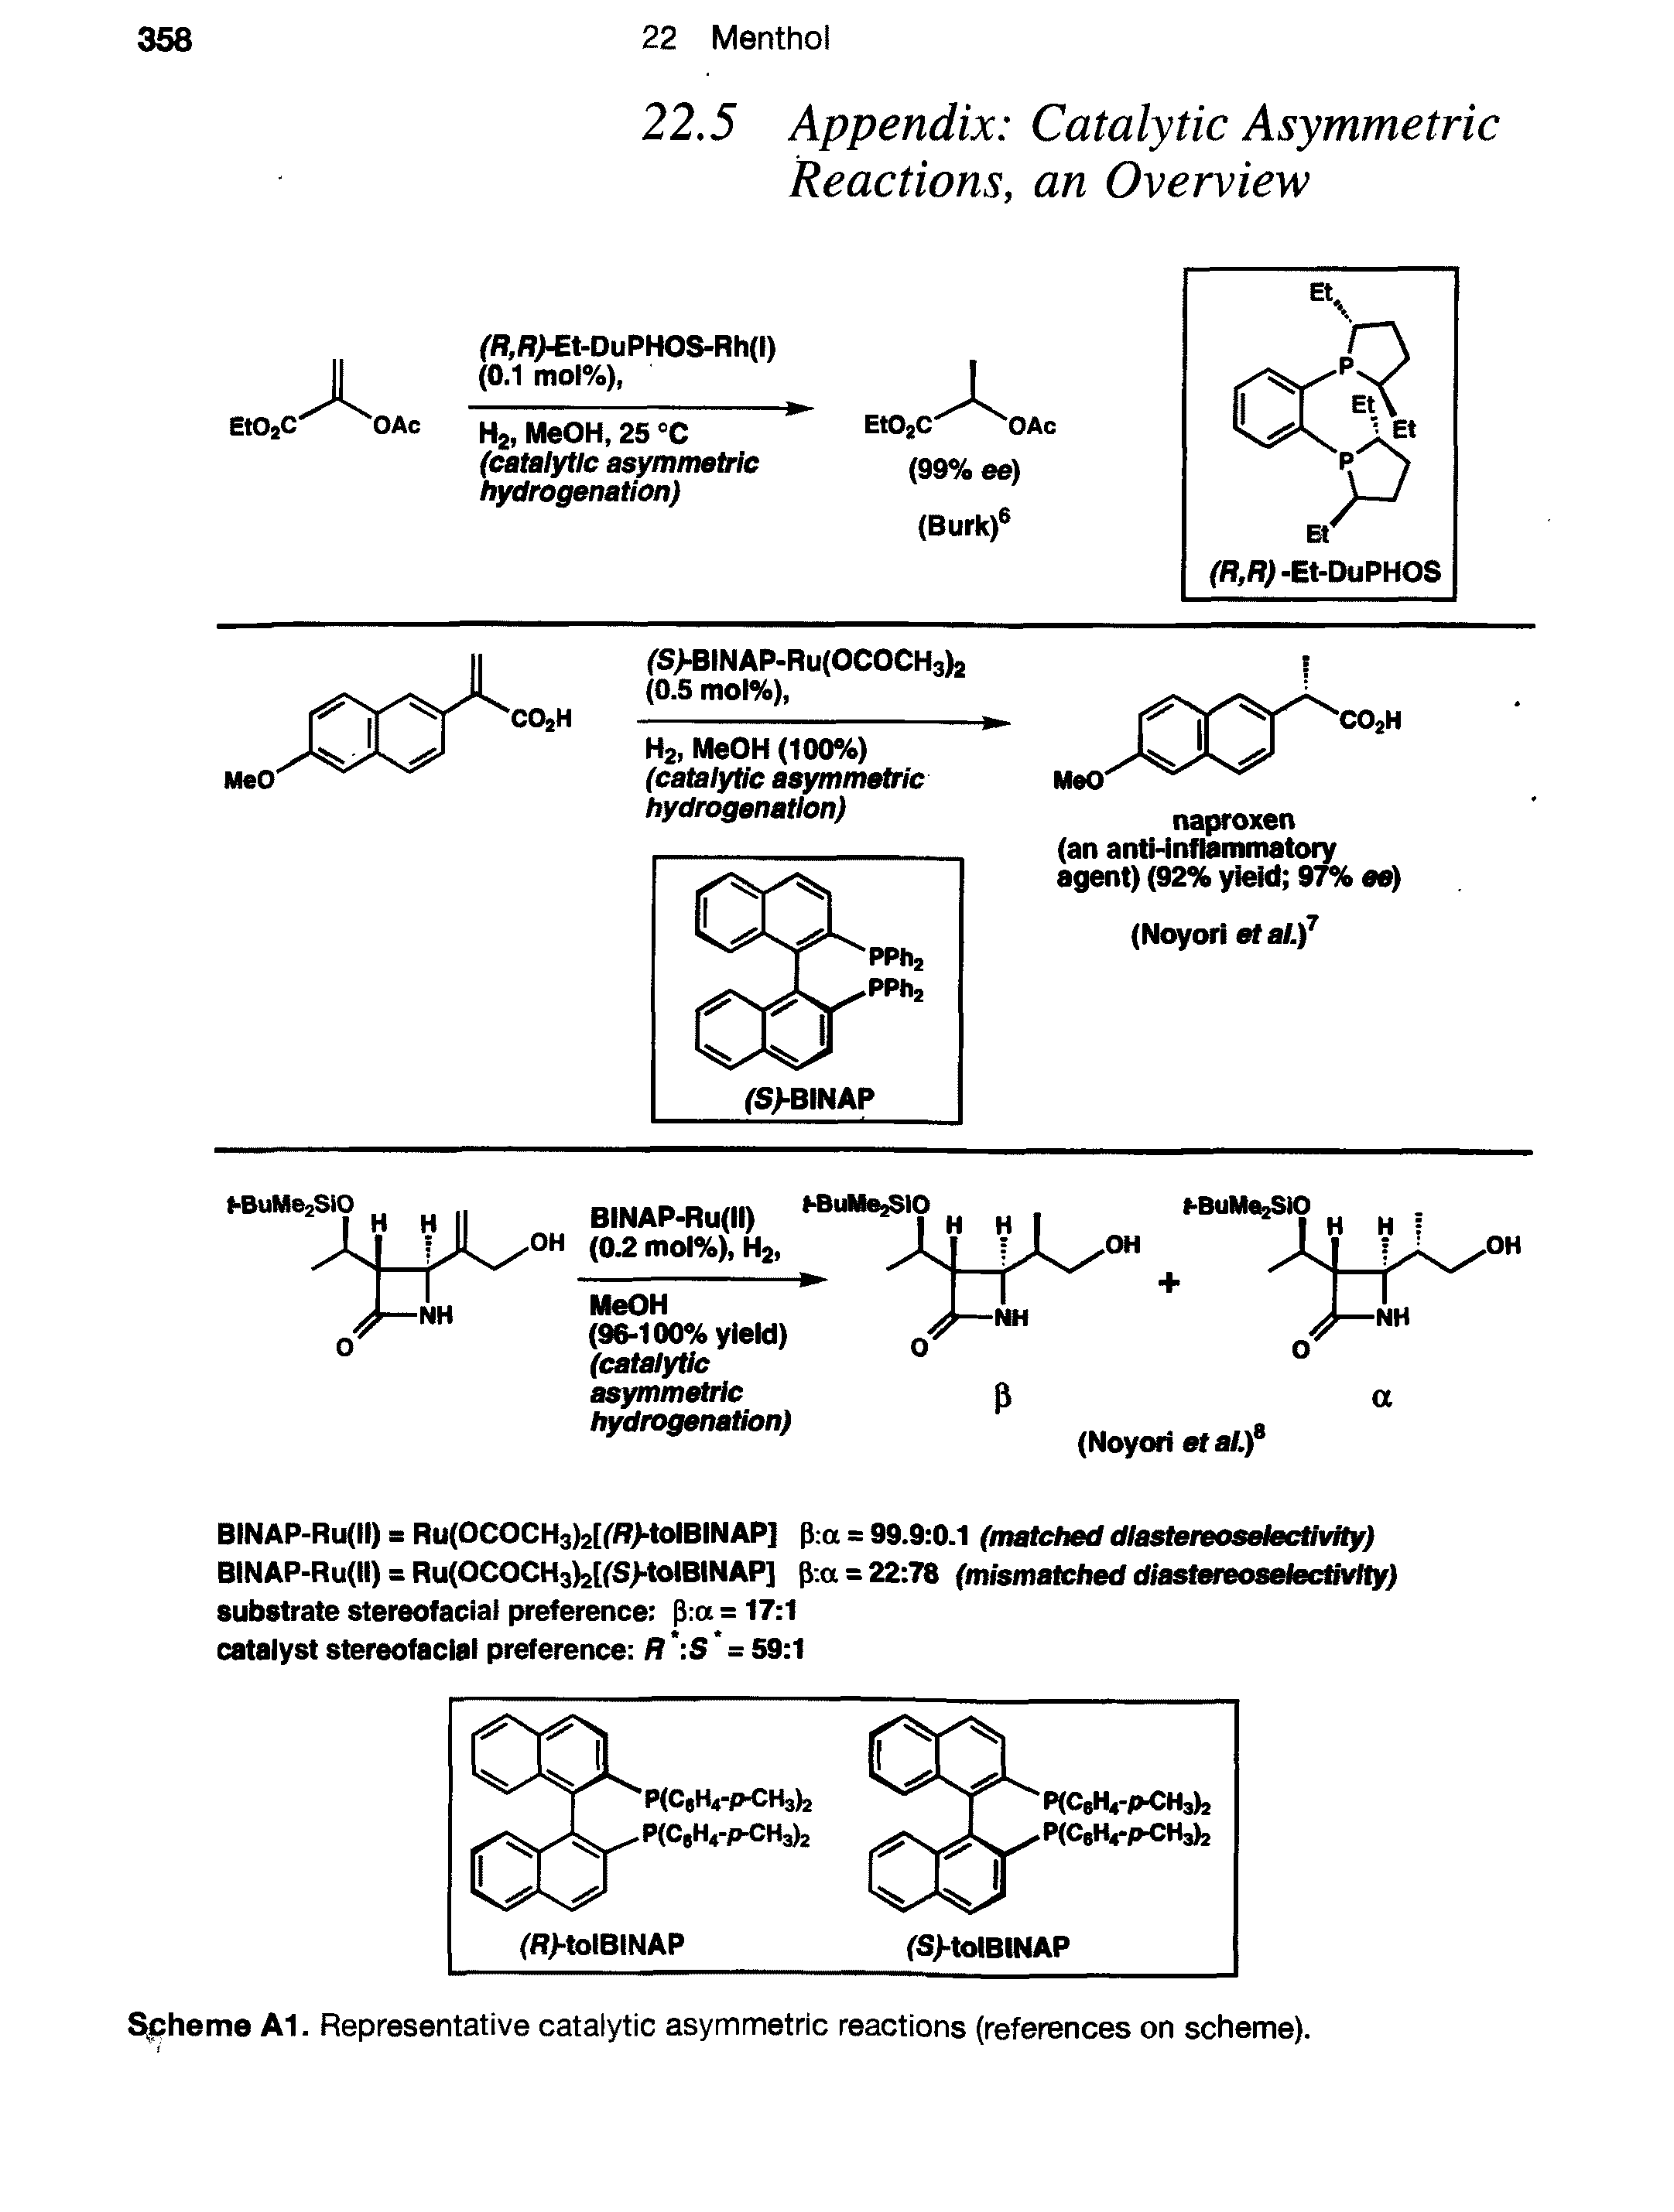 Scheme A1. Representative catalytic asymmetric reactions (references on scheme).